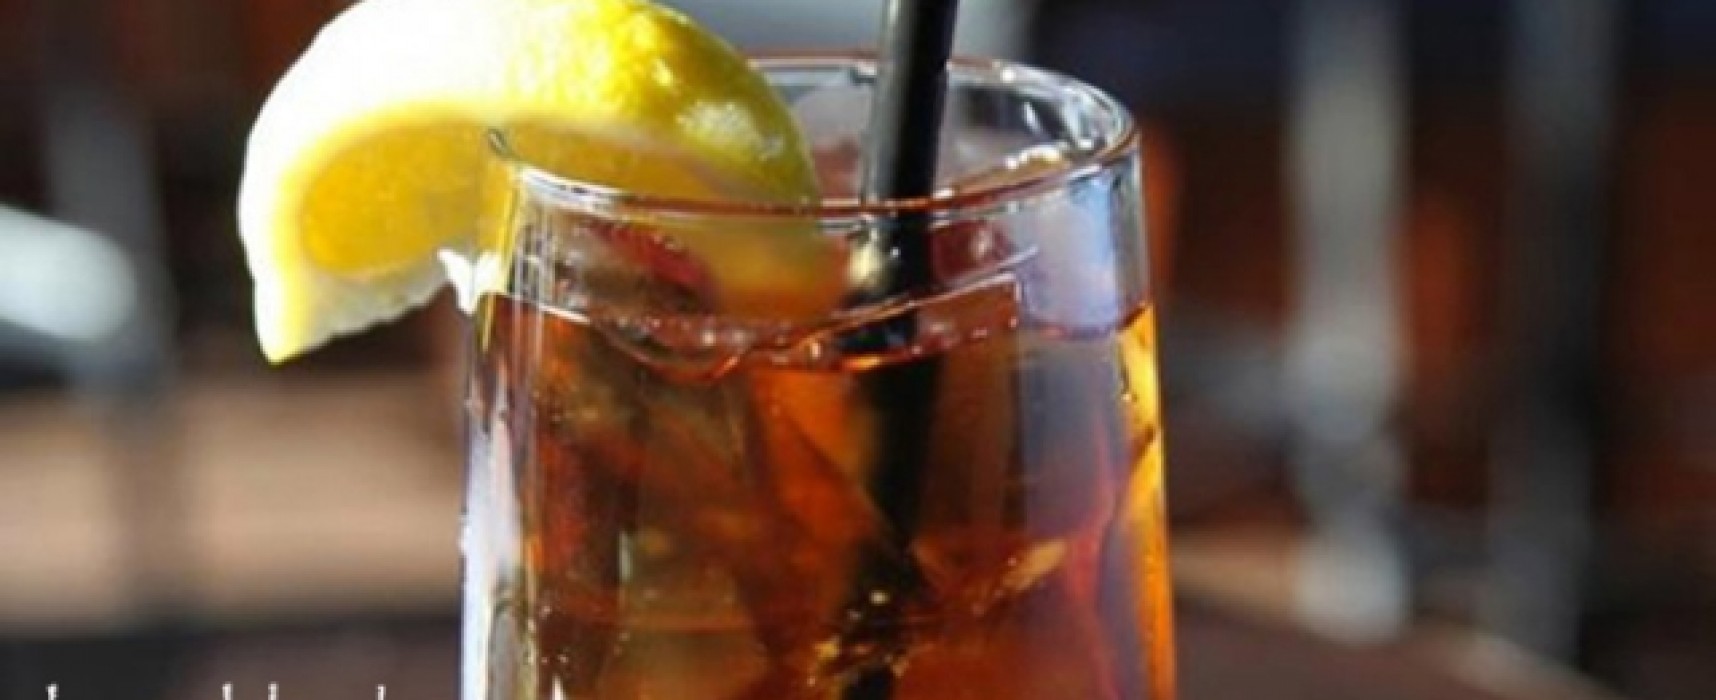 Long Island Ice Tea – A refreshing cocktail